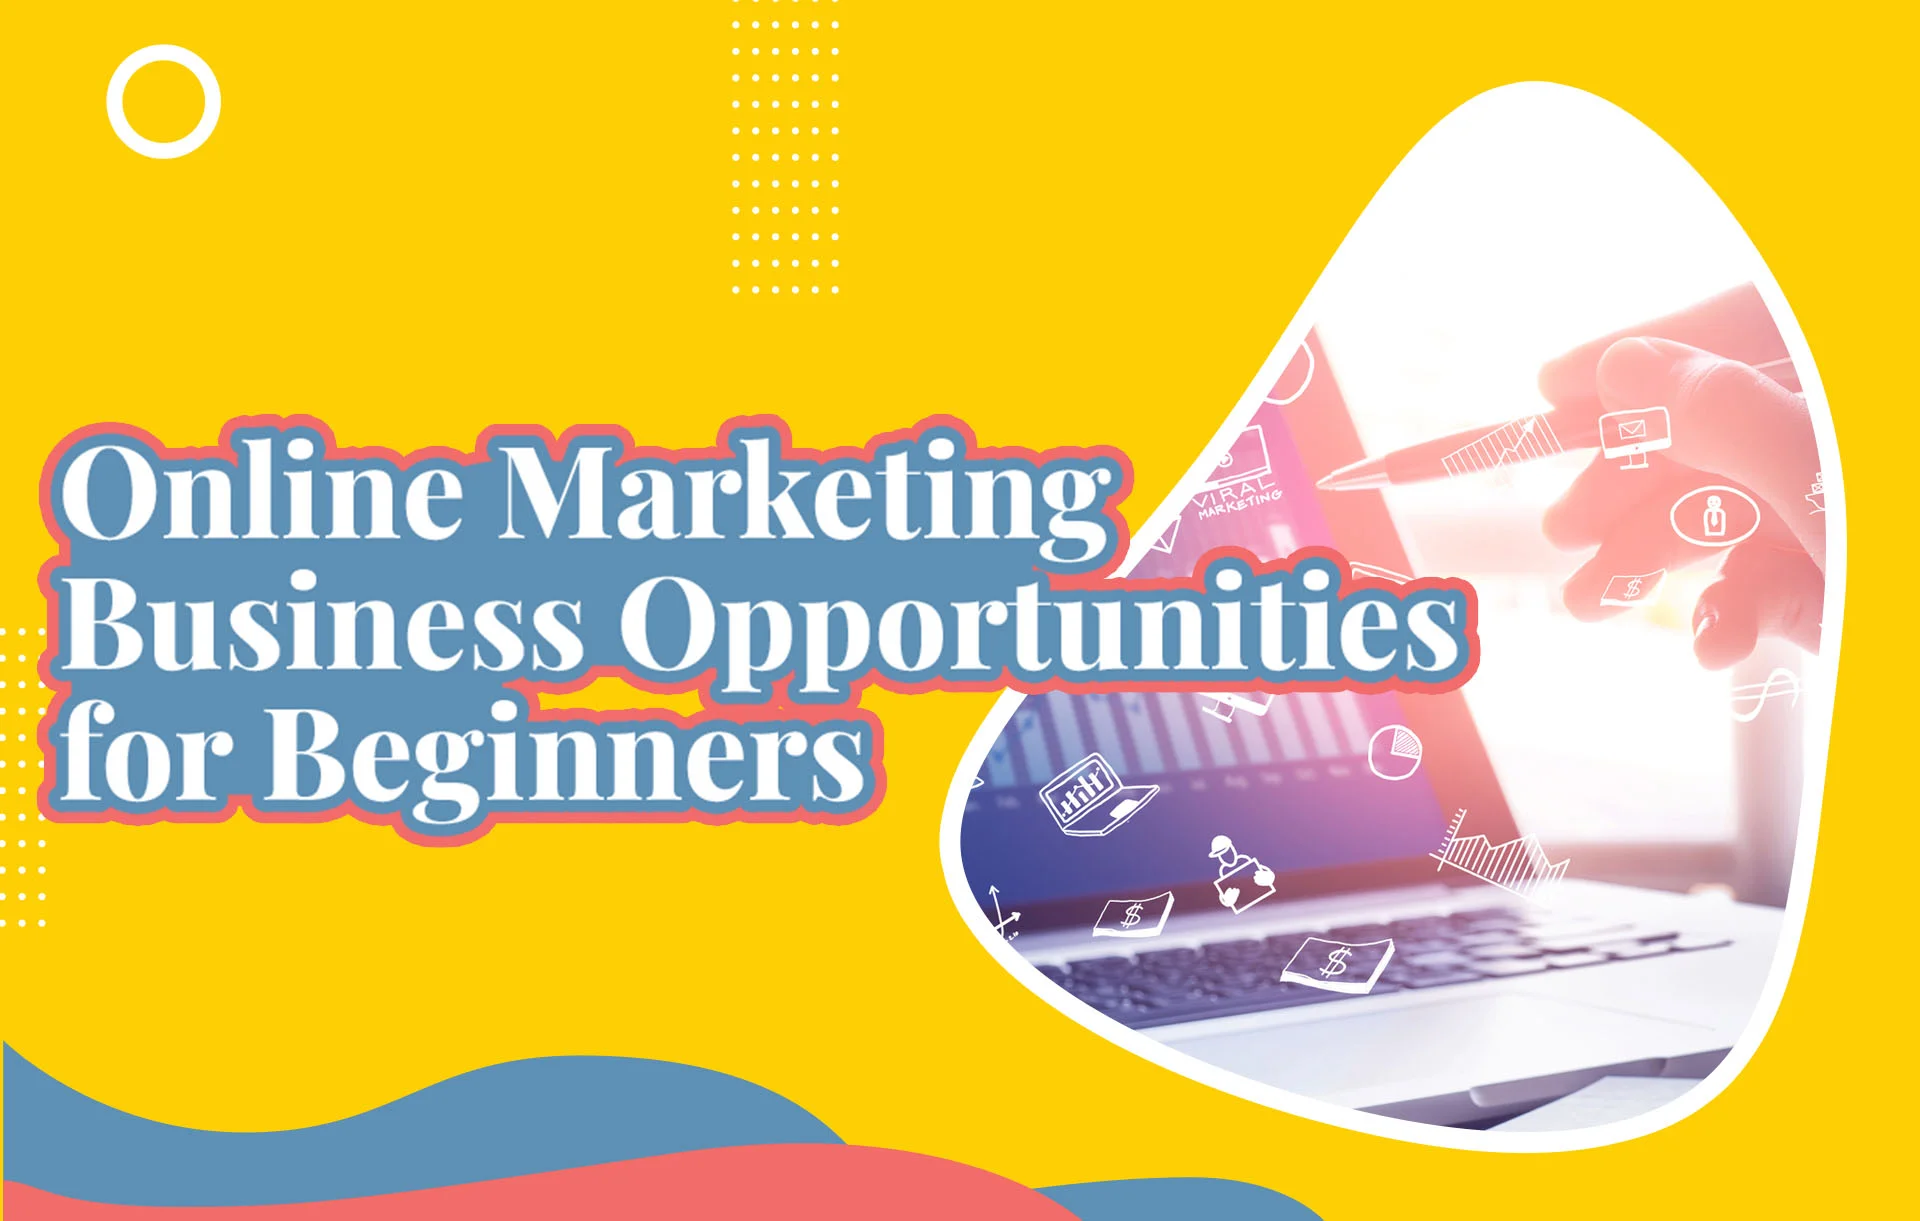 Online Marketing Business Opportunities for Beginners